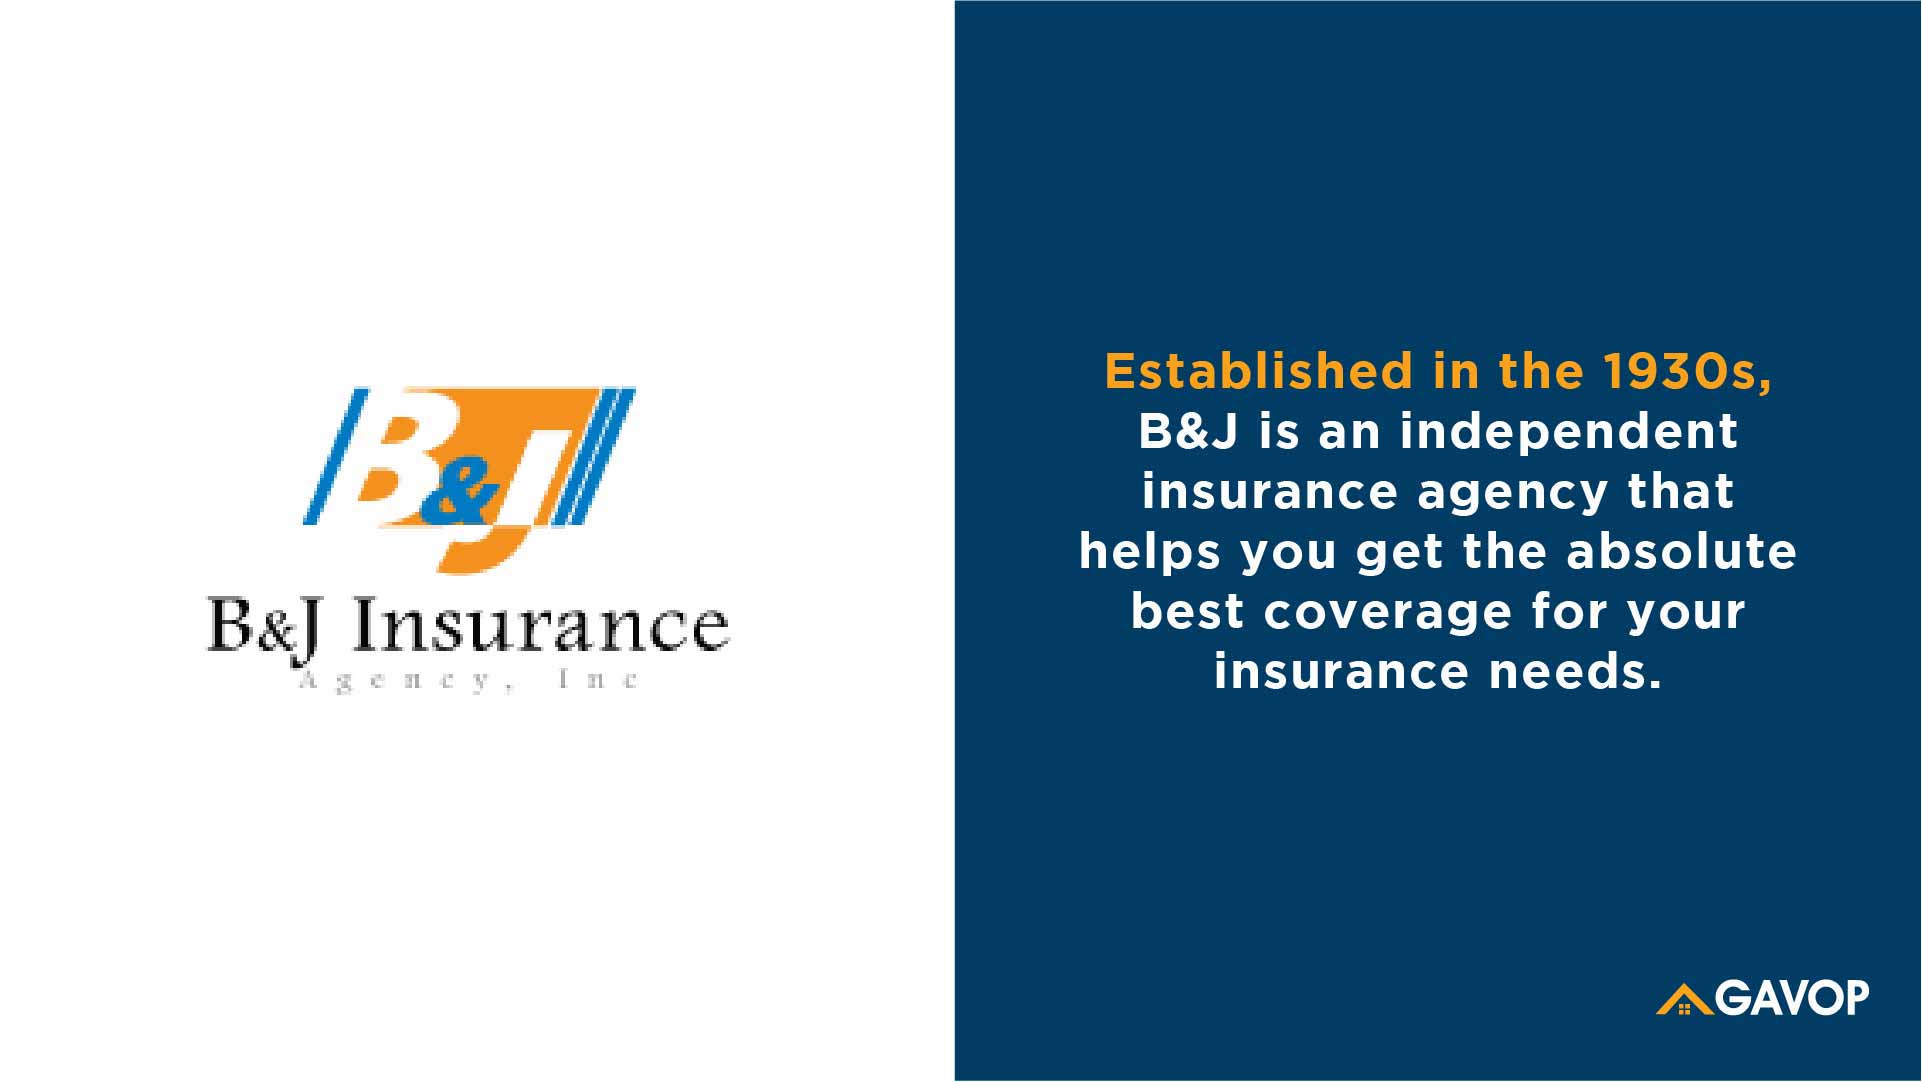 B&J Insurance Agency, Inc